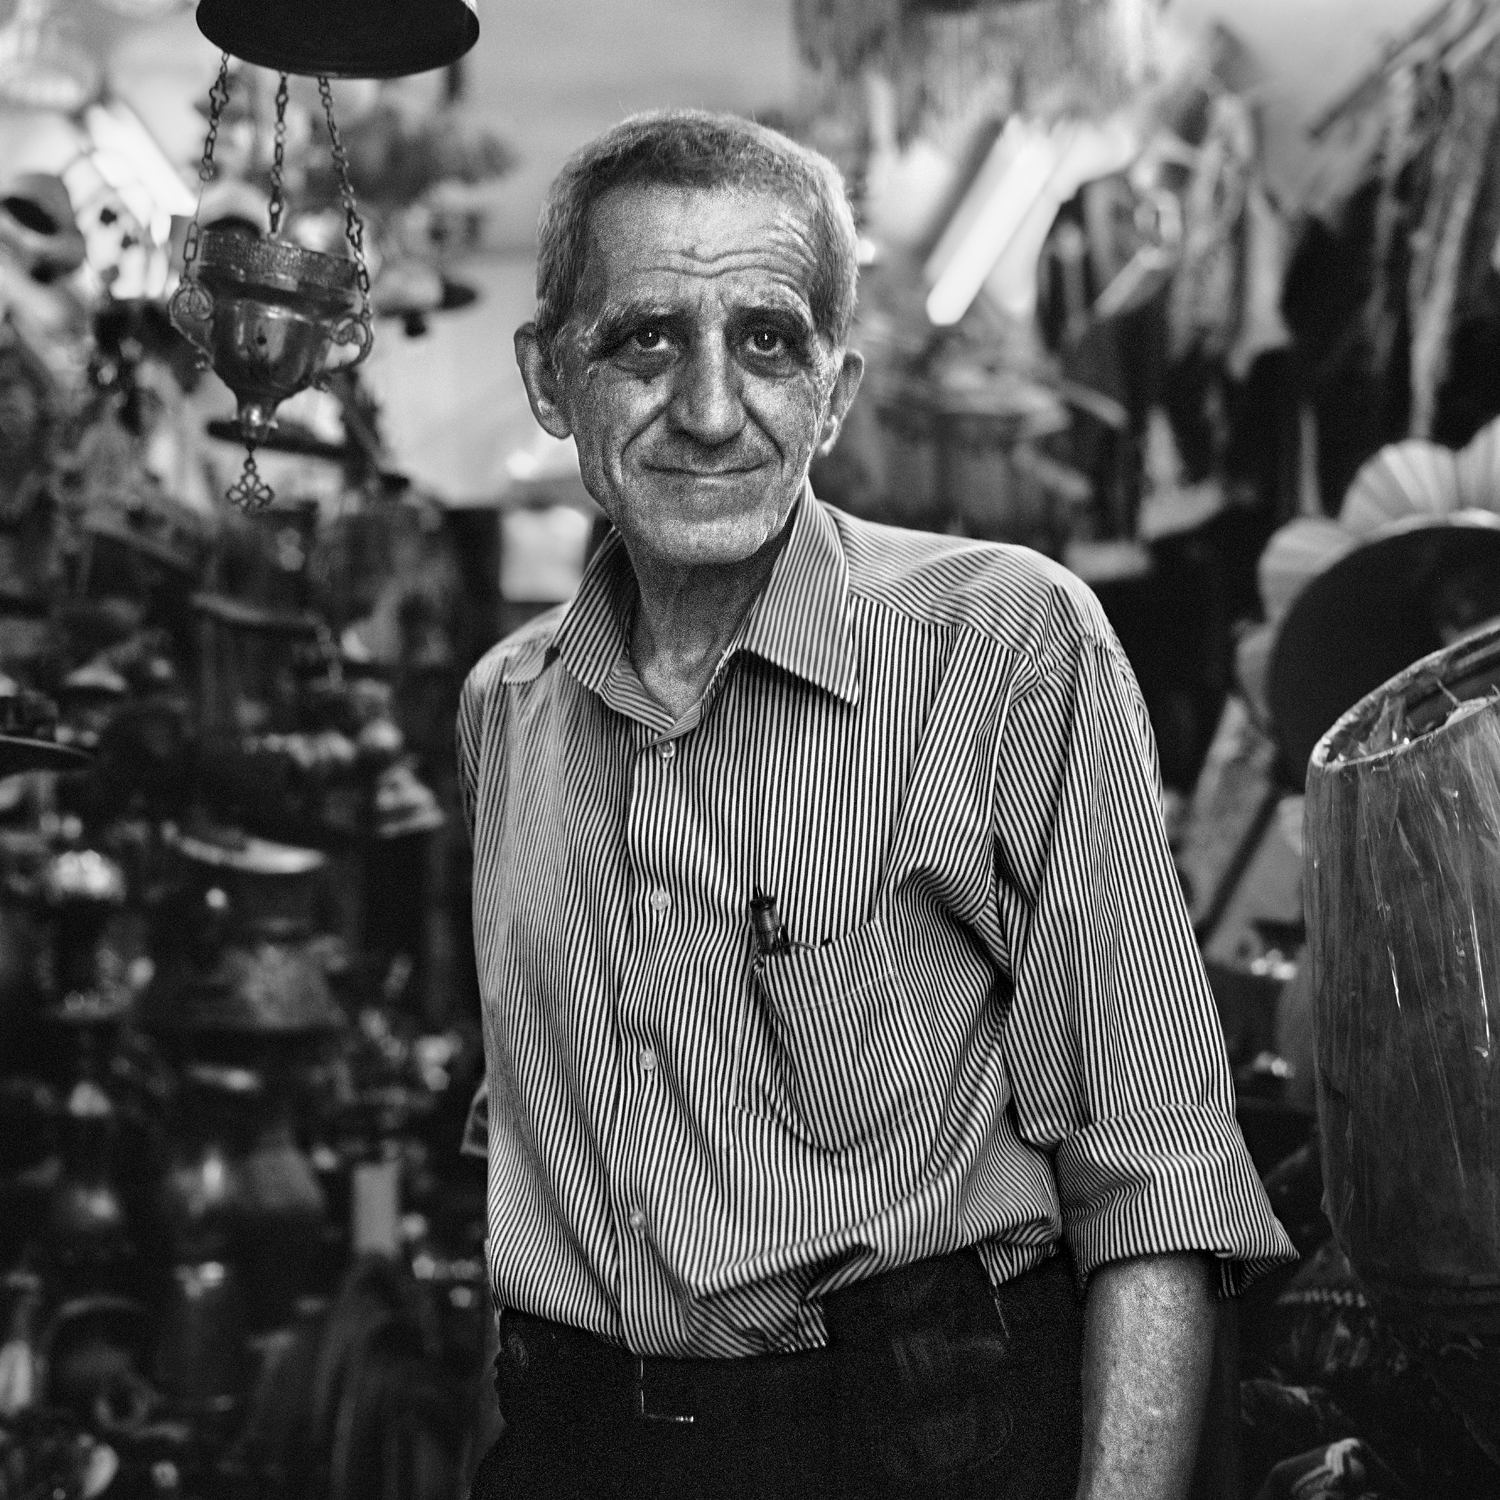 Shopkeeper No. 10, Israel 2011